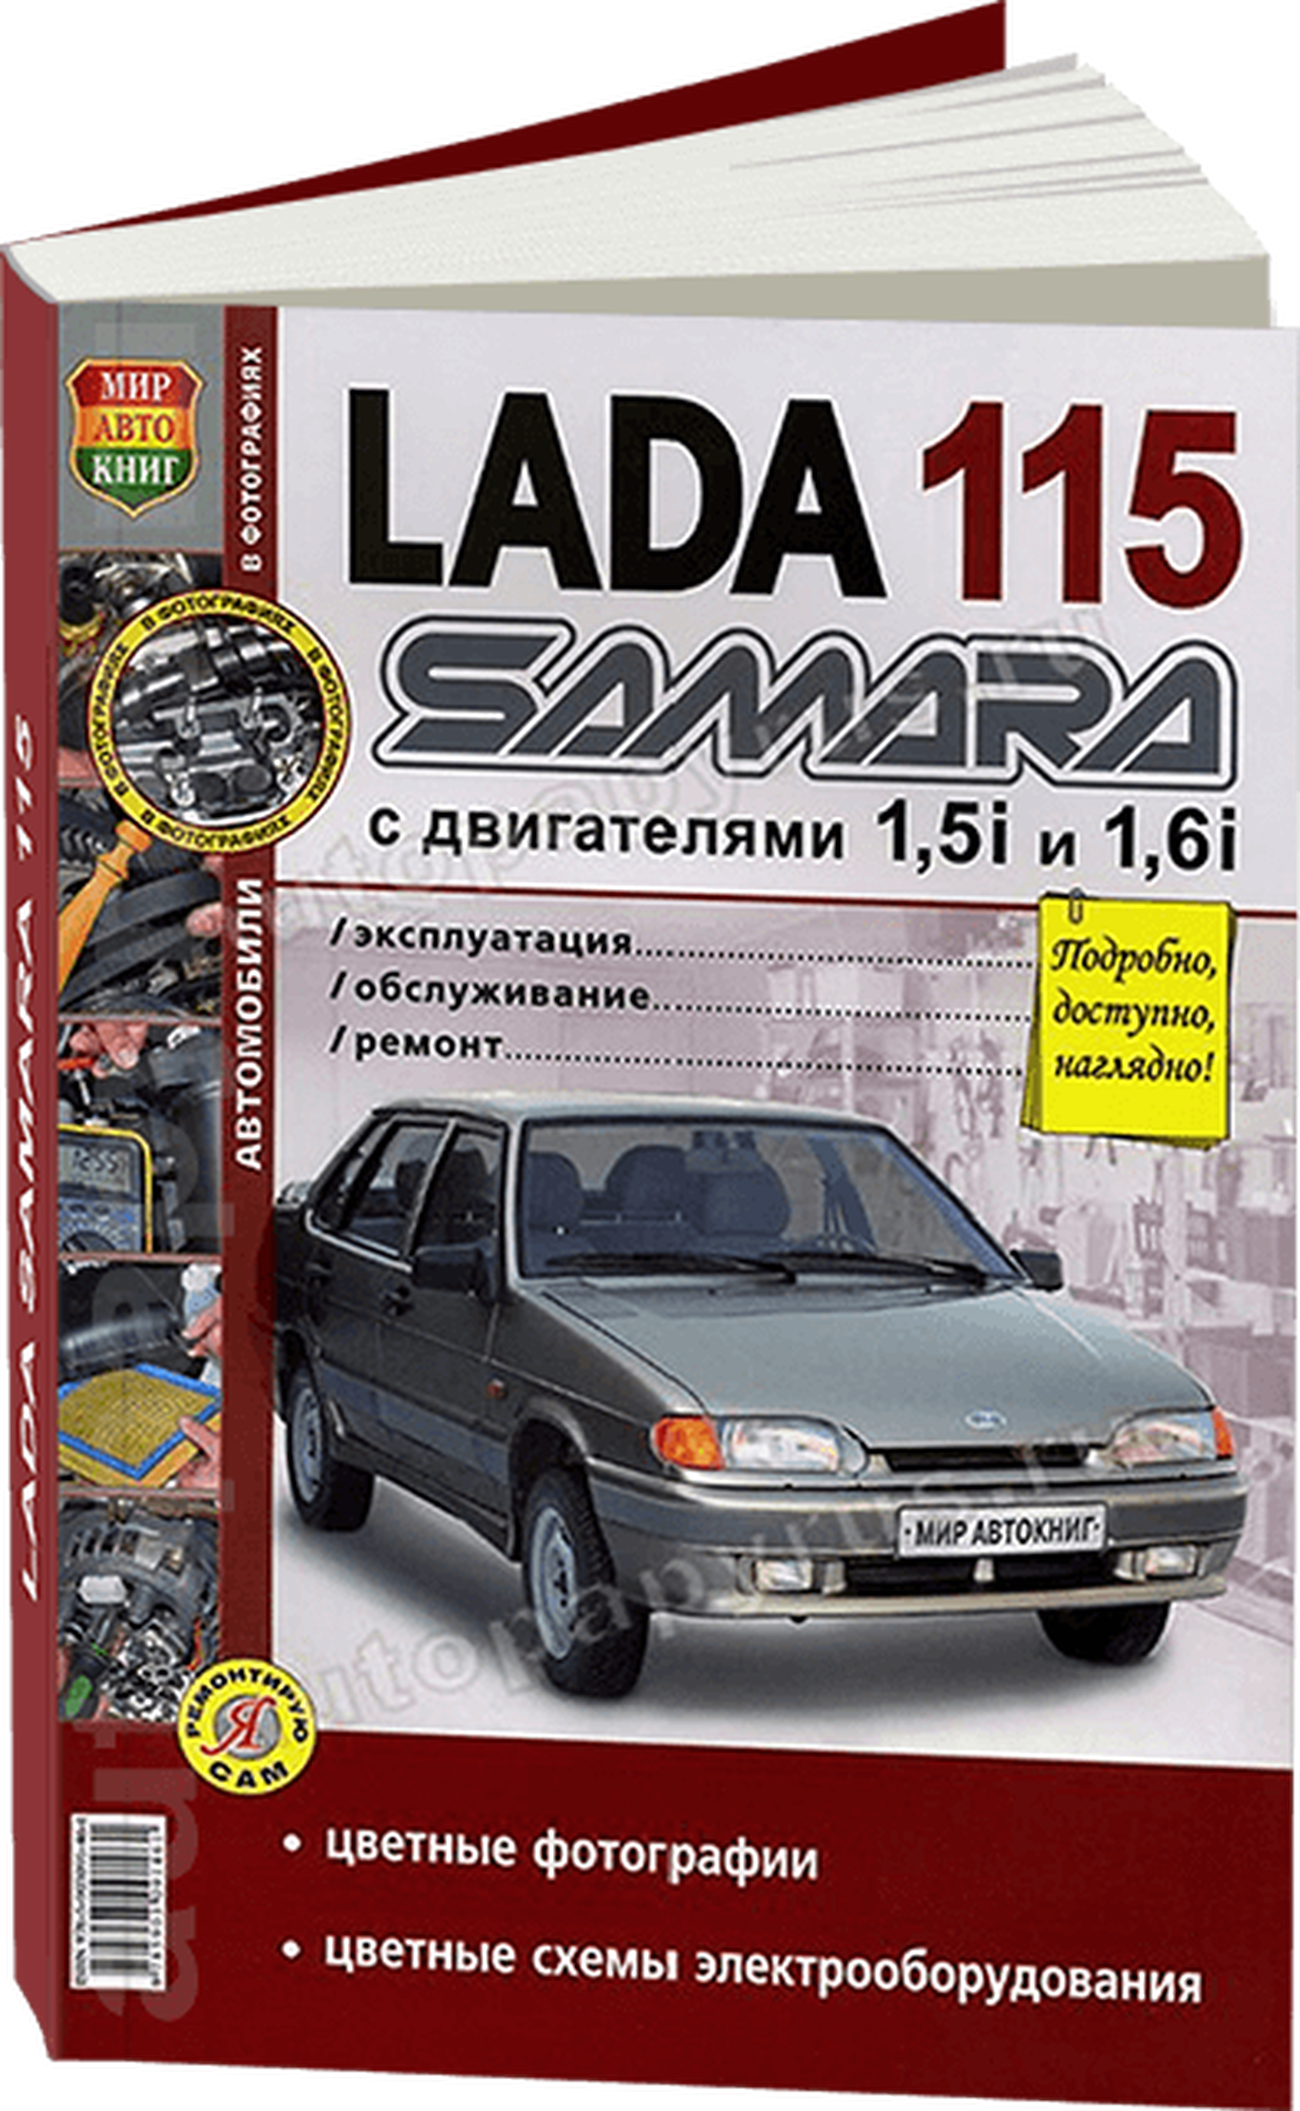 Книга: LADA 115 | SAMARA (ВАЗ 2115) (б) рем., экспл., то, ЦВЕТ. фото., сер. ЯРС | Мир Автокниг